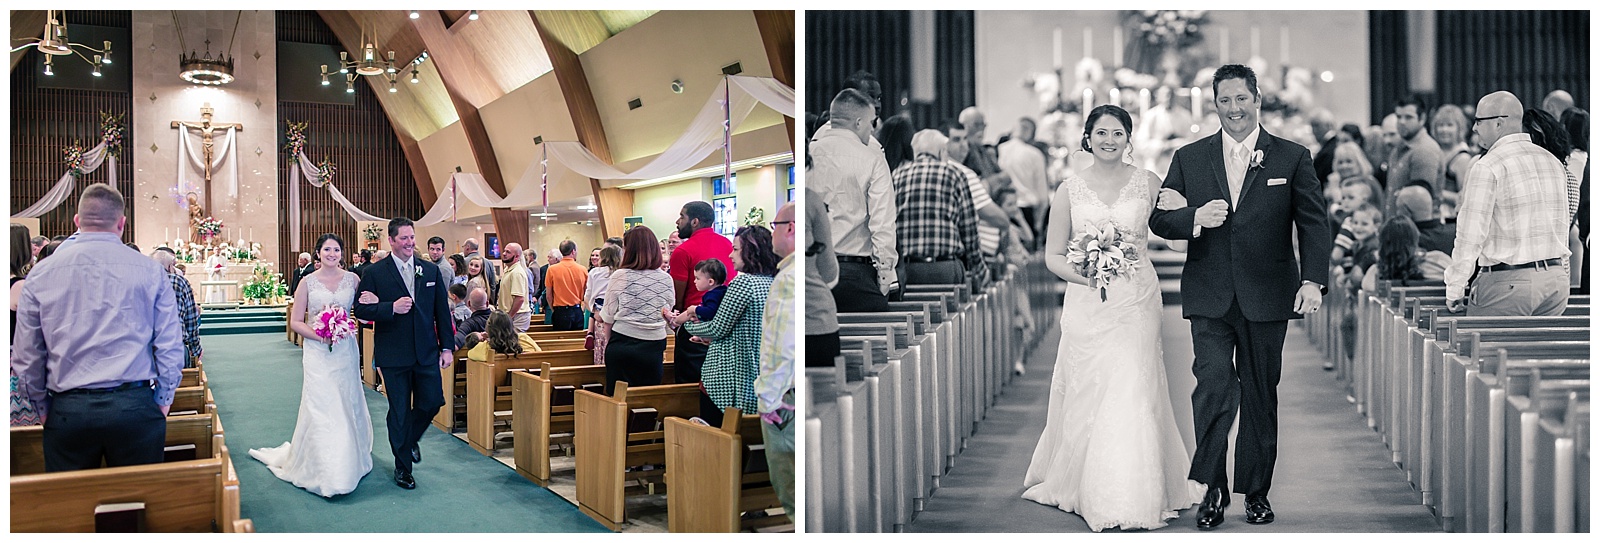 Wedding photography at Most Pure Heart of Mary Catholic Church in Topeka, Kansas.